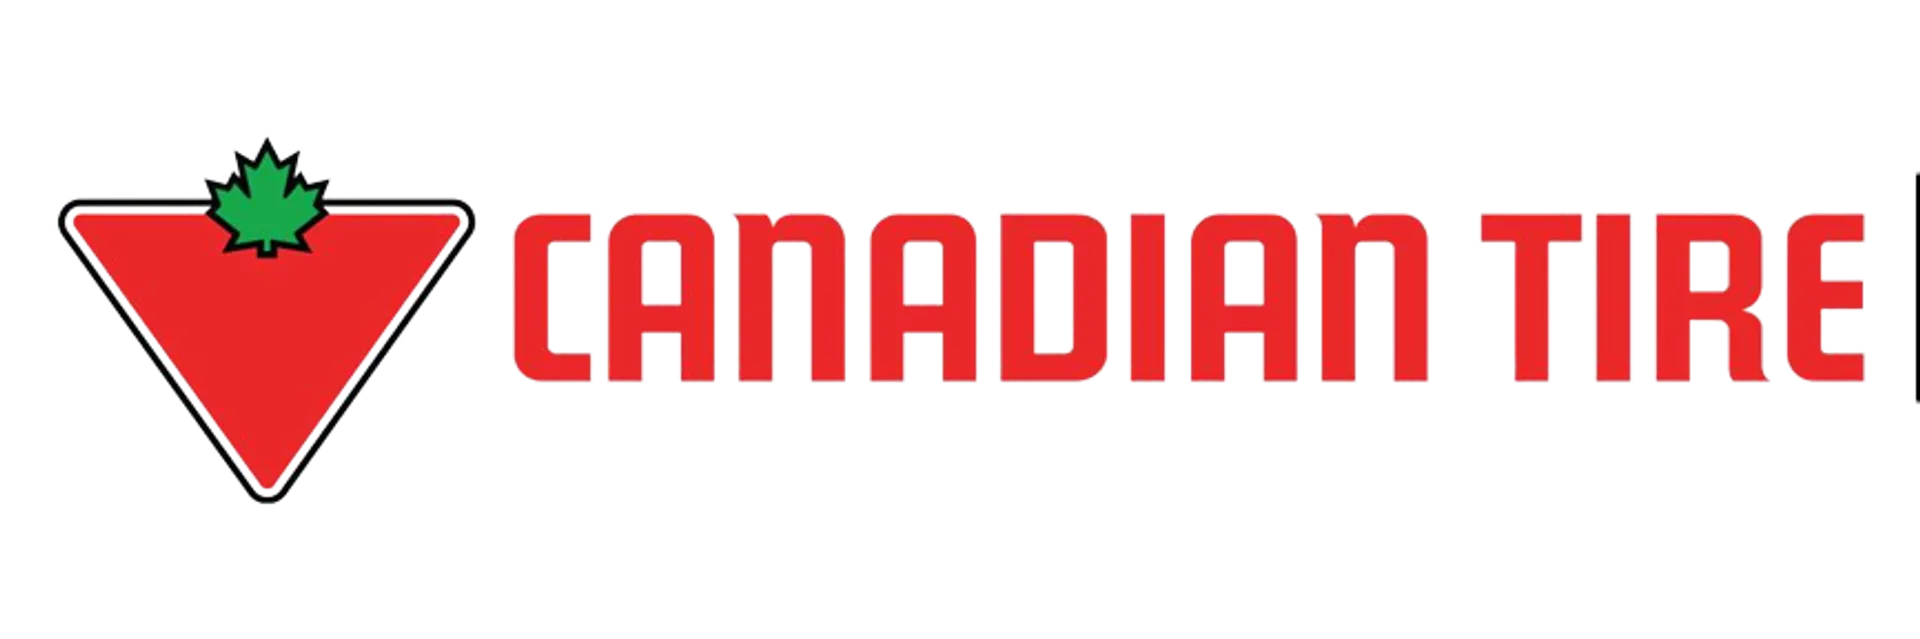 CANADIAN TIRE logo